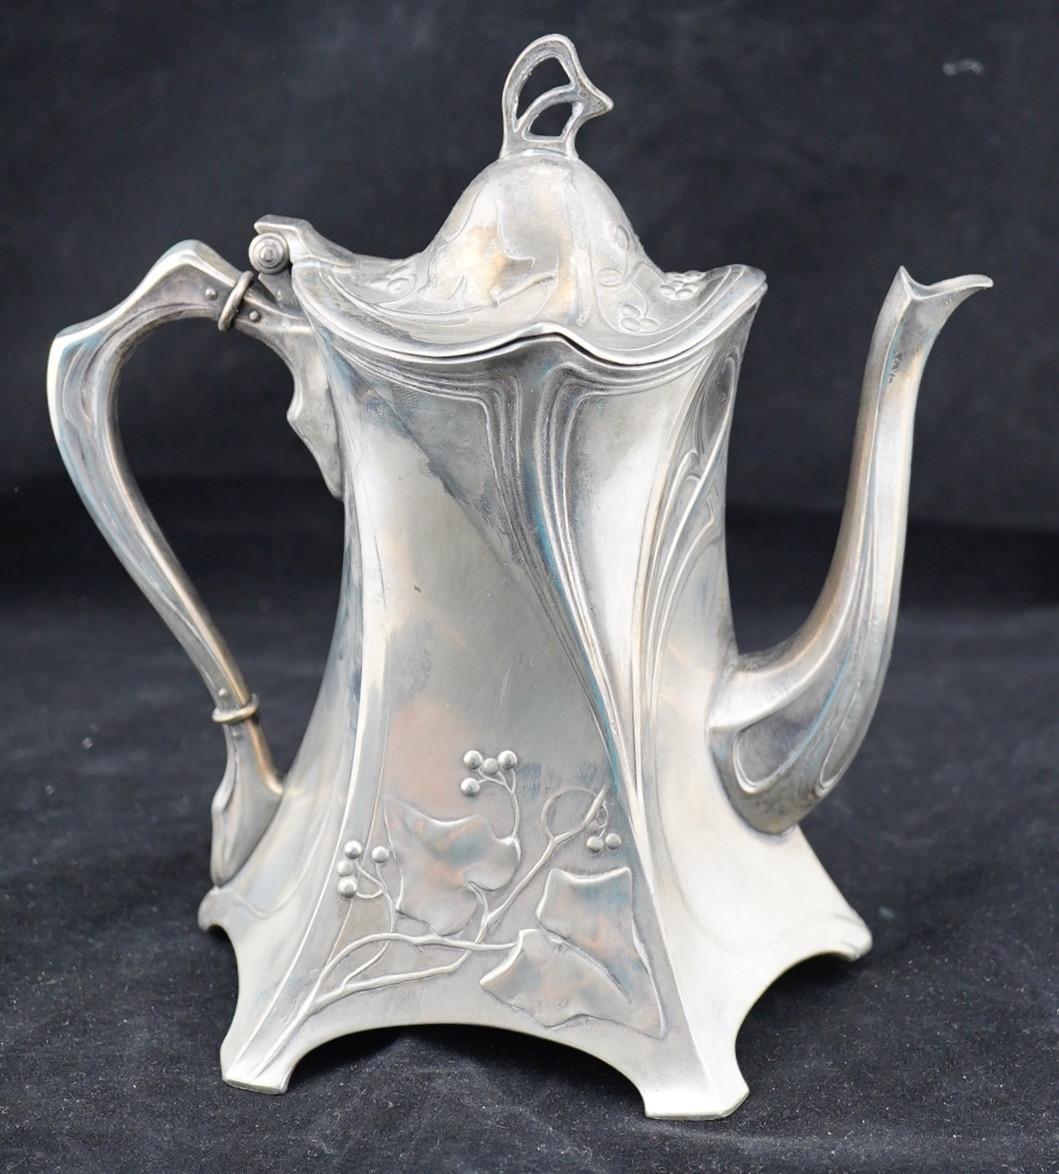 Anodized WMF Art Nouveau Jugendstil Tea Service and Trey For Sale